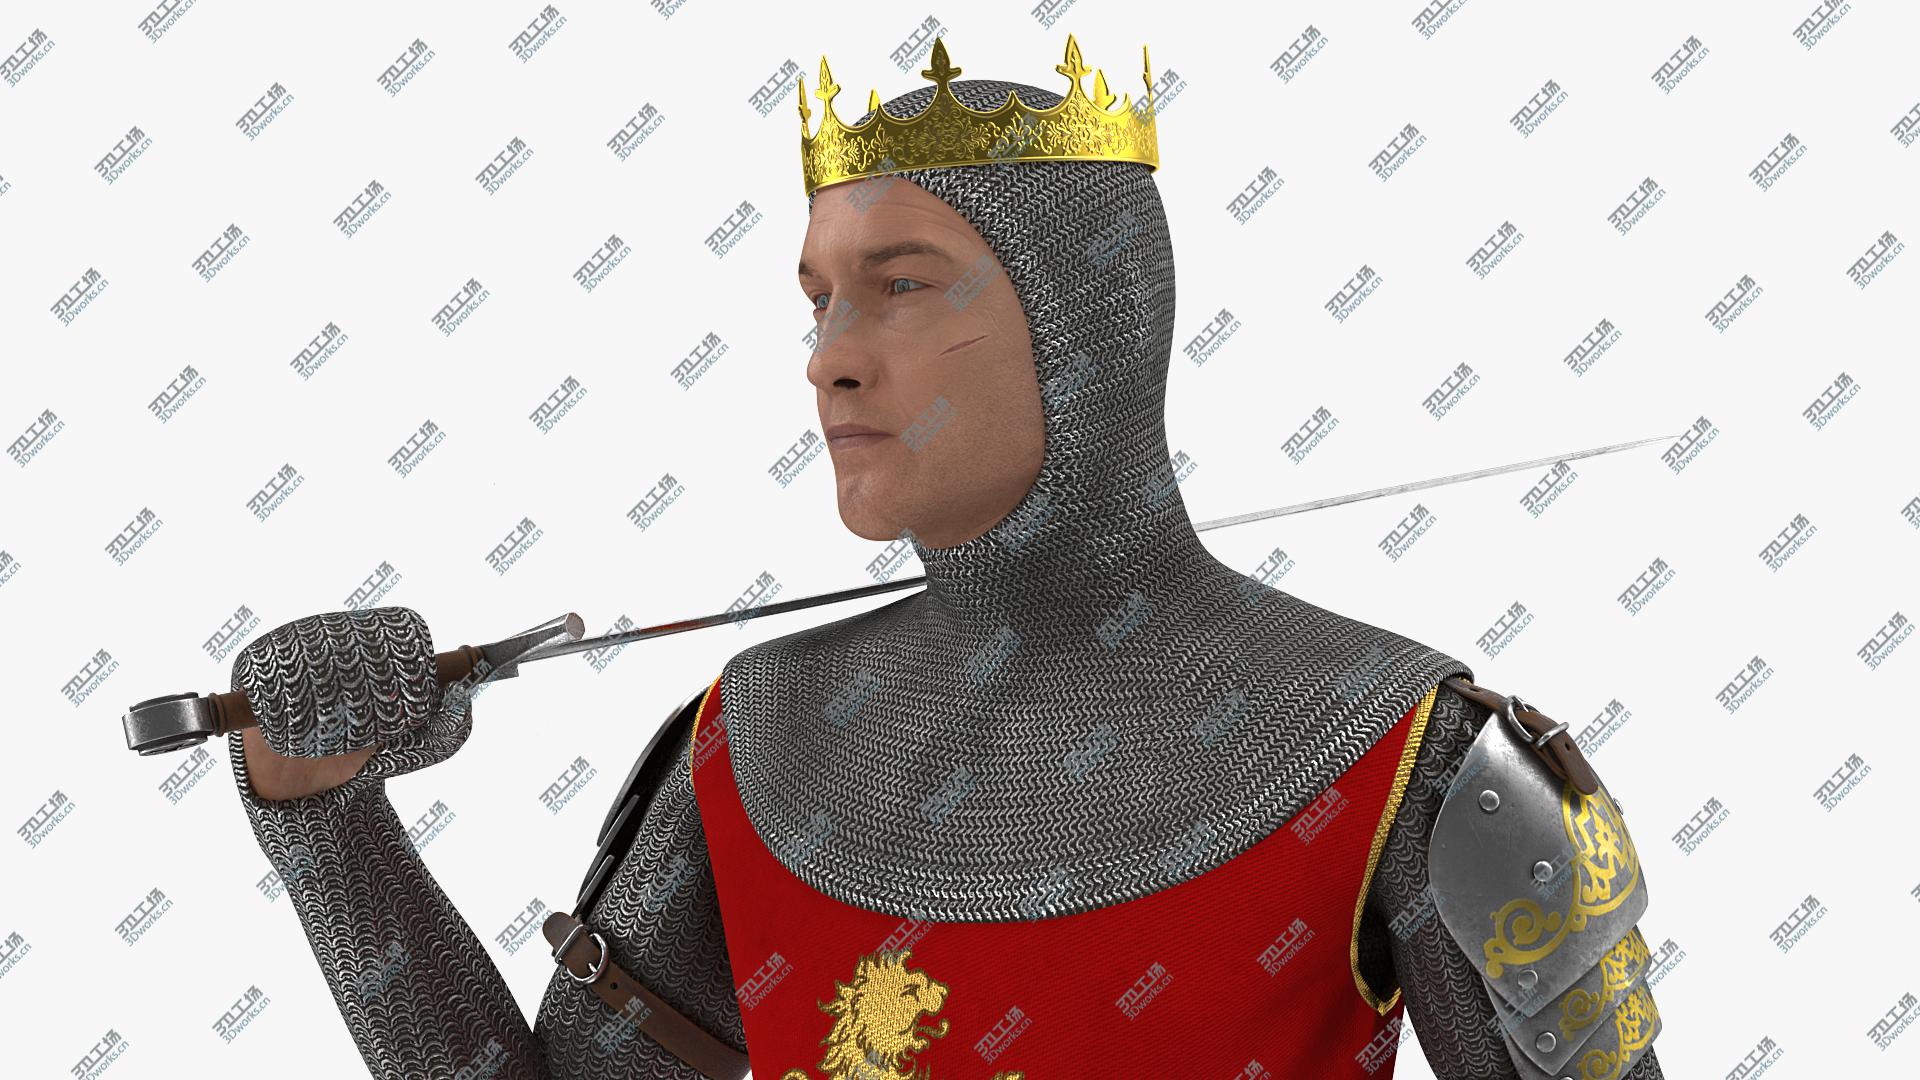 images/goods_img/202104093/3D Crusader Knight King Walking Pose model/5.jpg